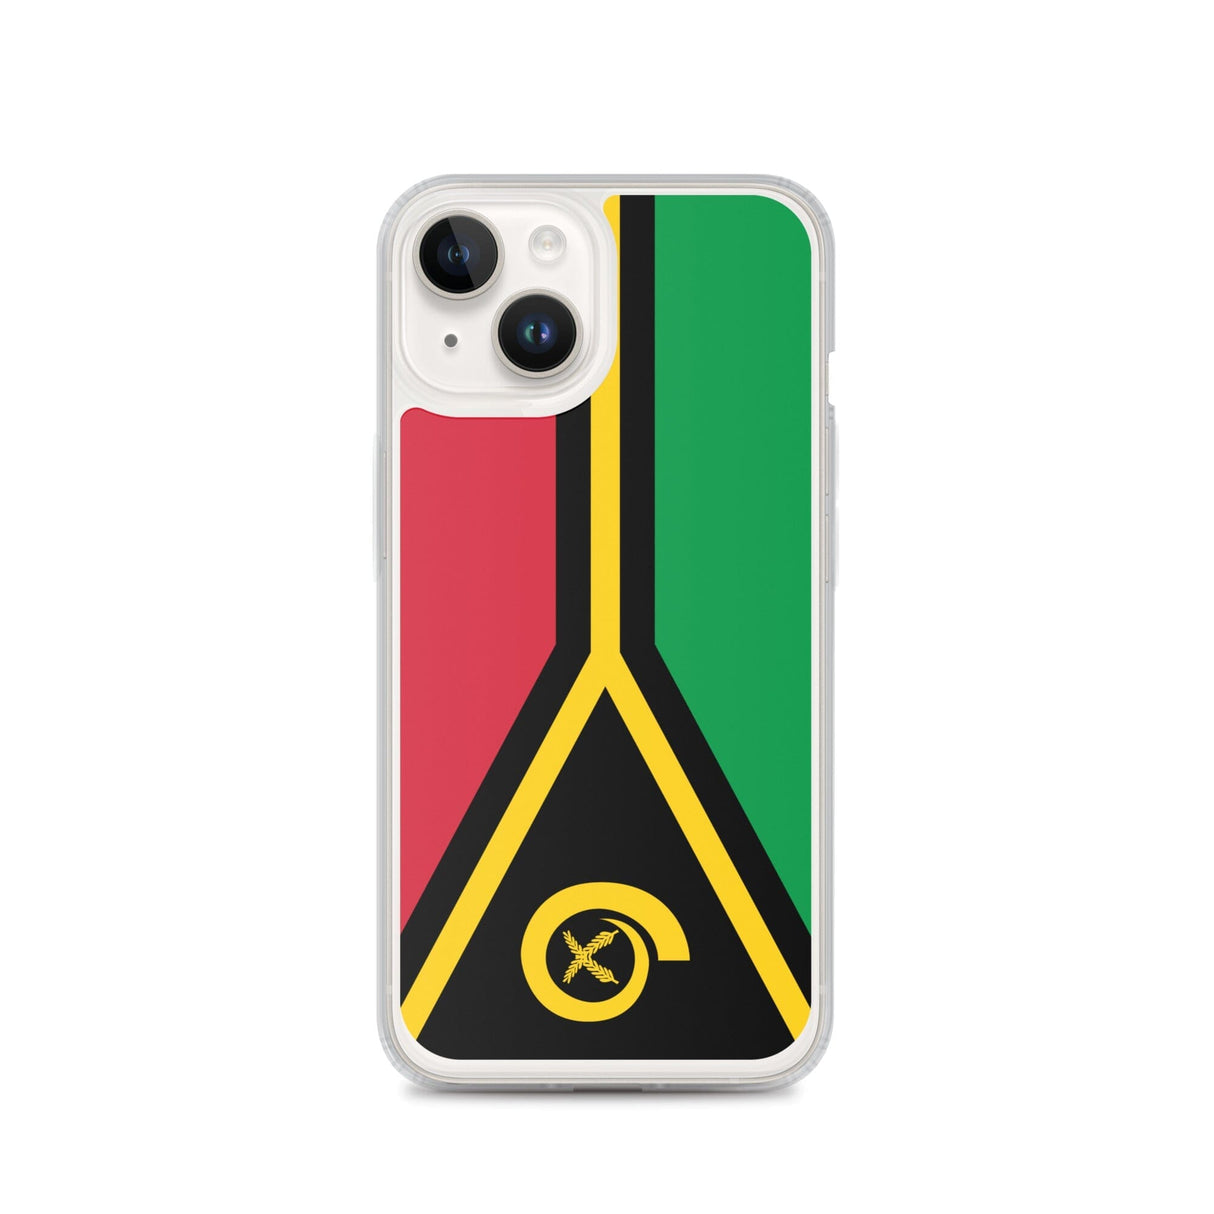 Vanuatu Flag iPhone Case - Pixelforma